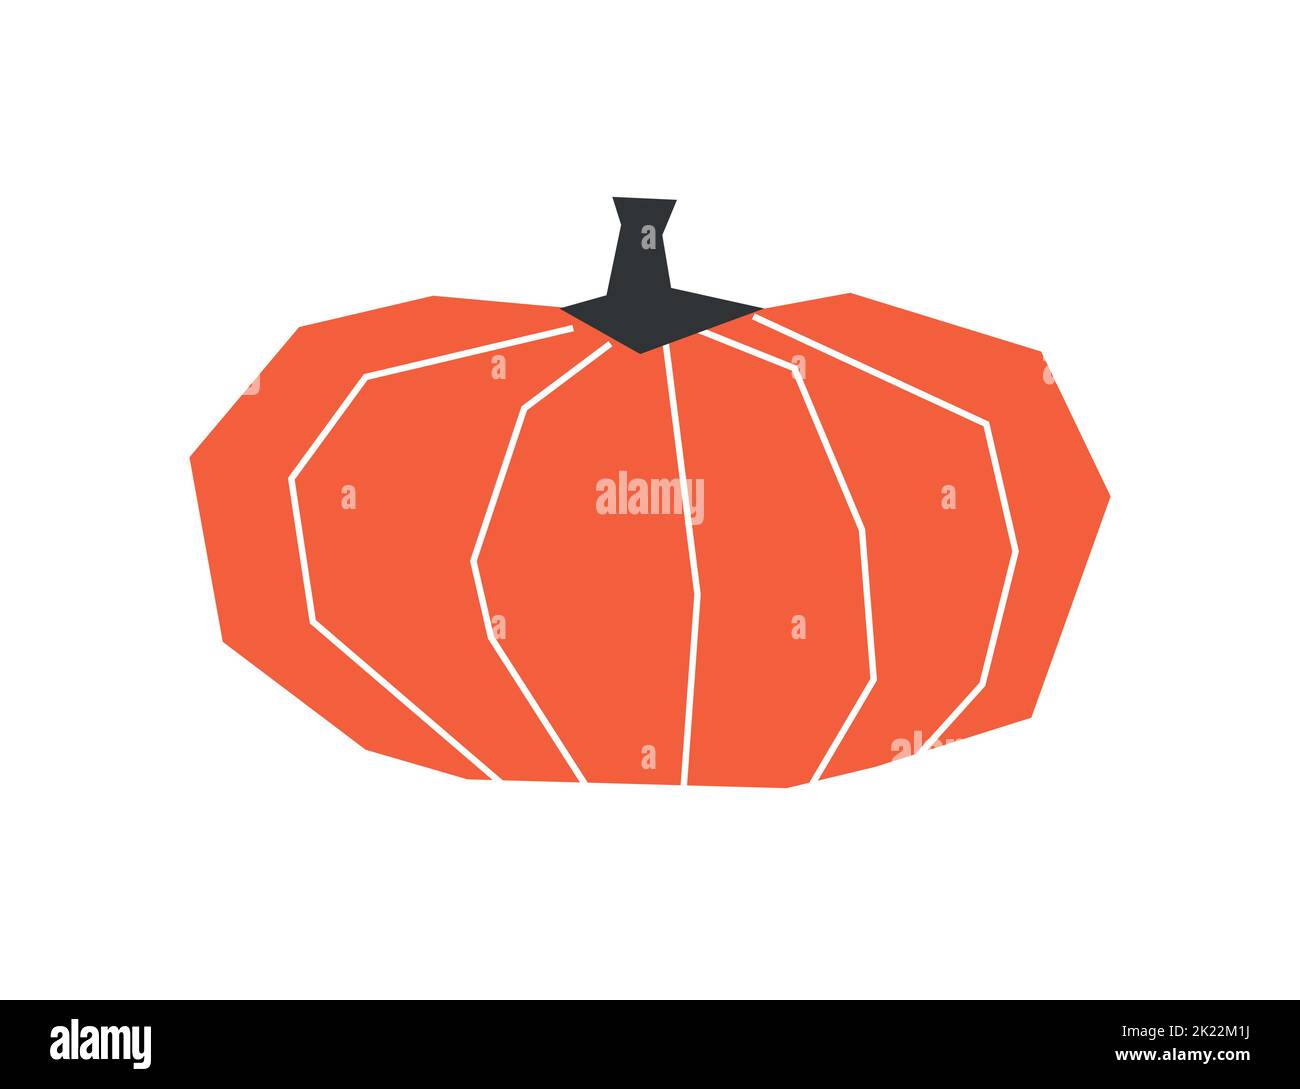 Vector isolated illustration with botanical element - fresh faitytale pumpkin. Orange vegetarian symbol of autumn - squash. Decorative minimalistic ha Stock Vector